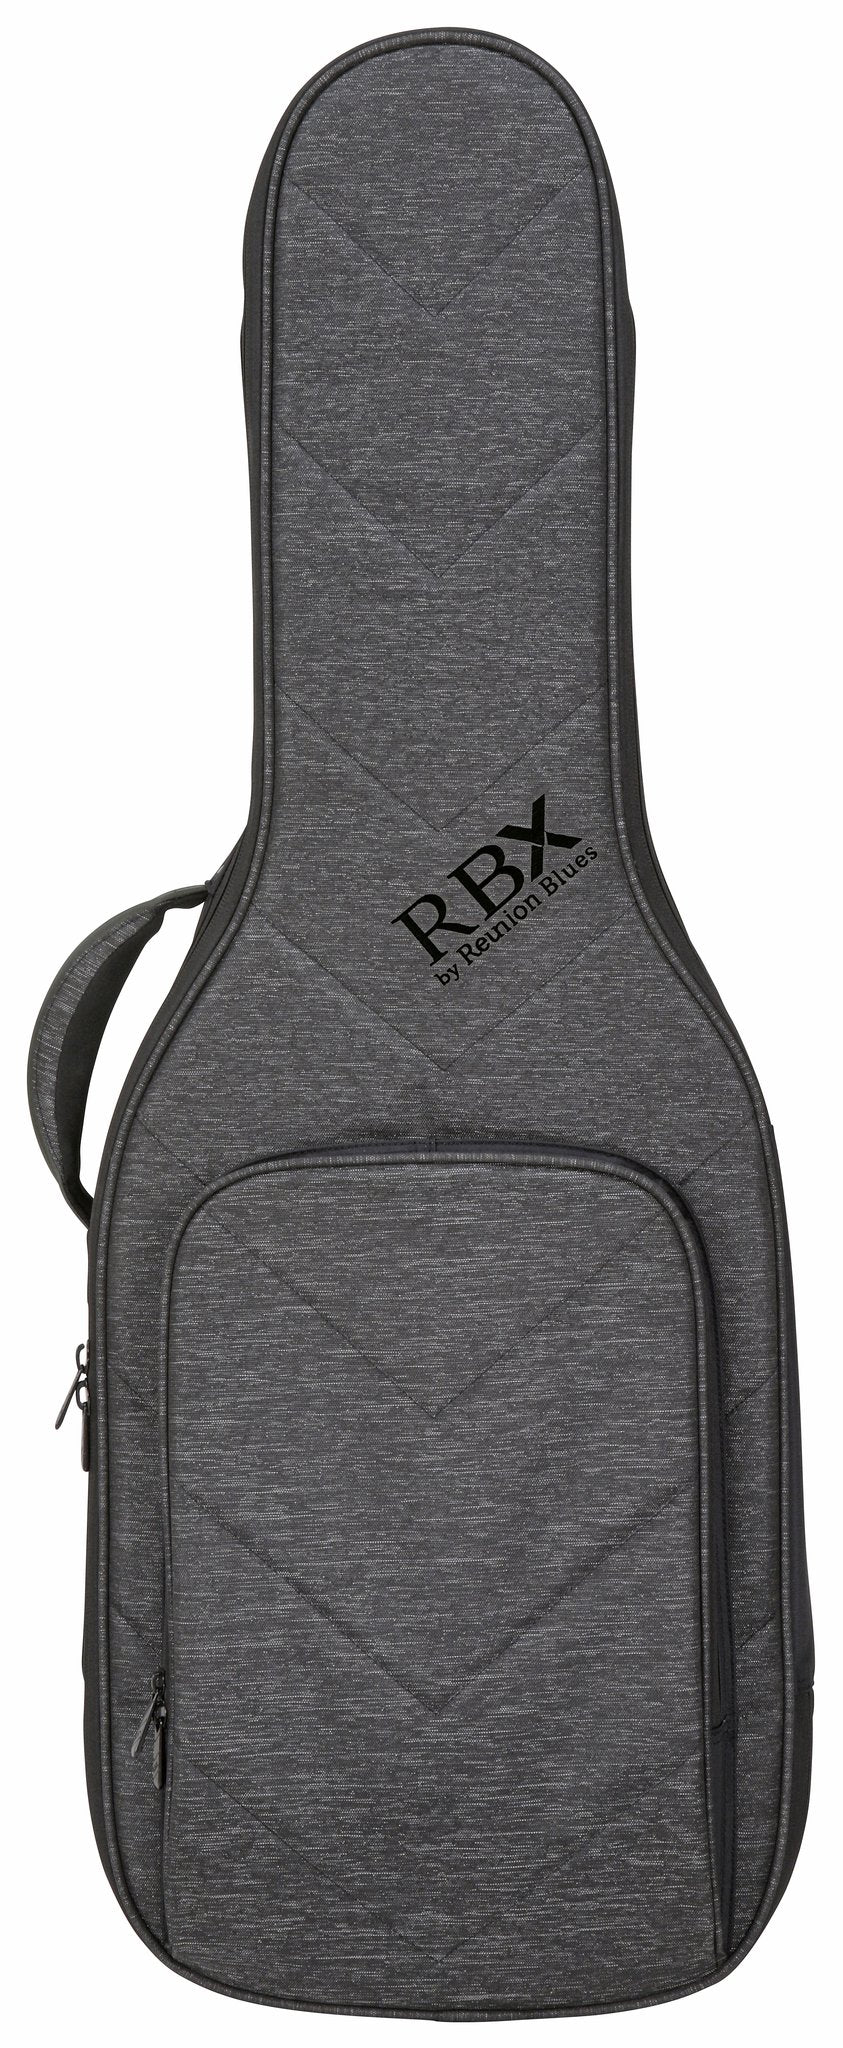 Reunion Blues RBX Oxford Electric Guitar Bag